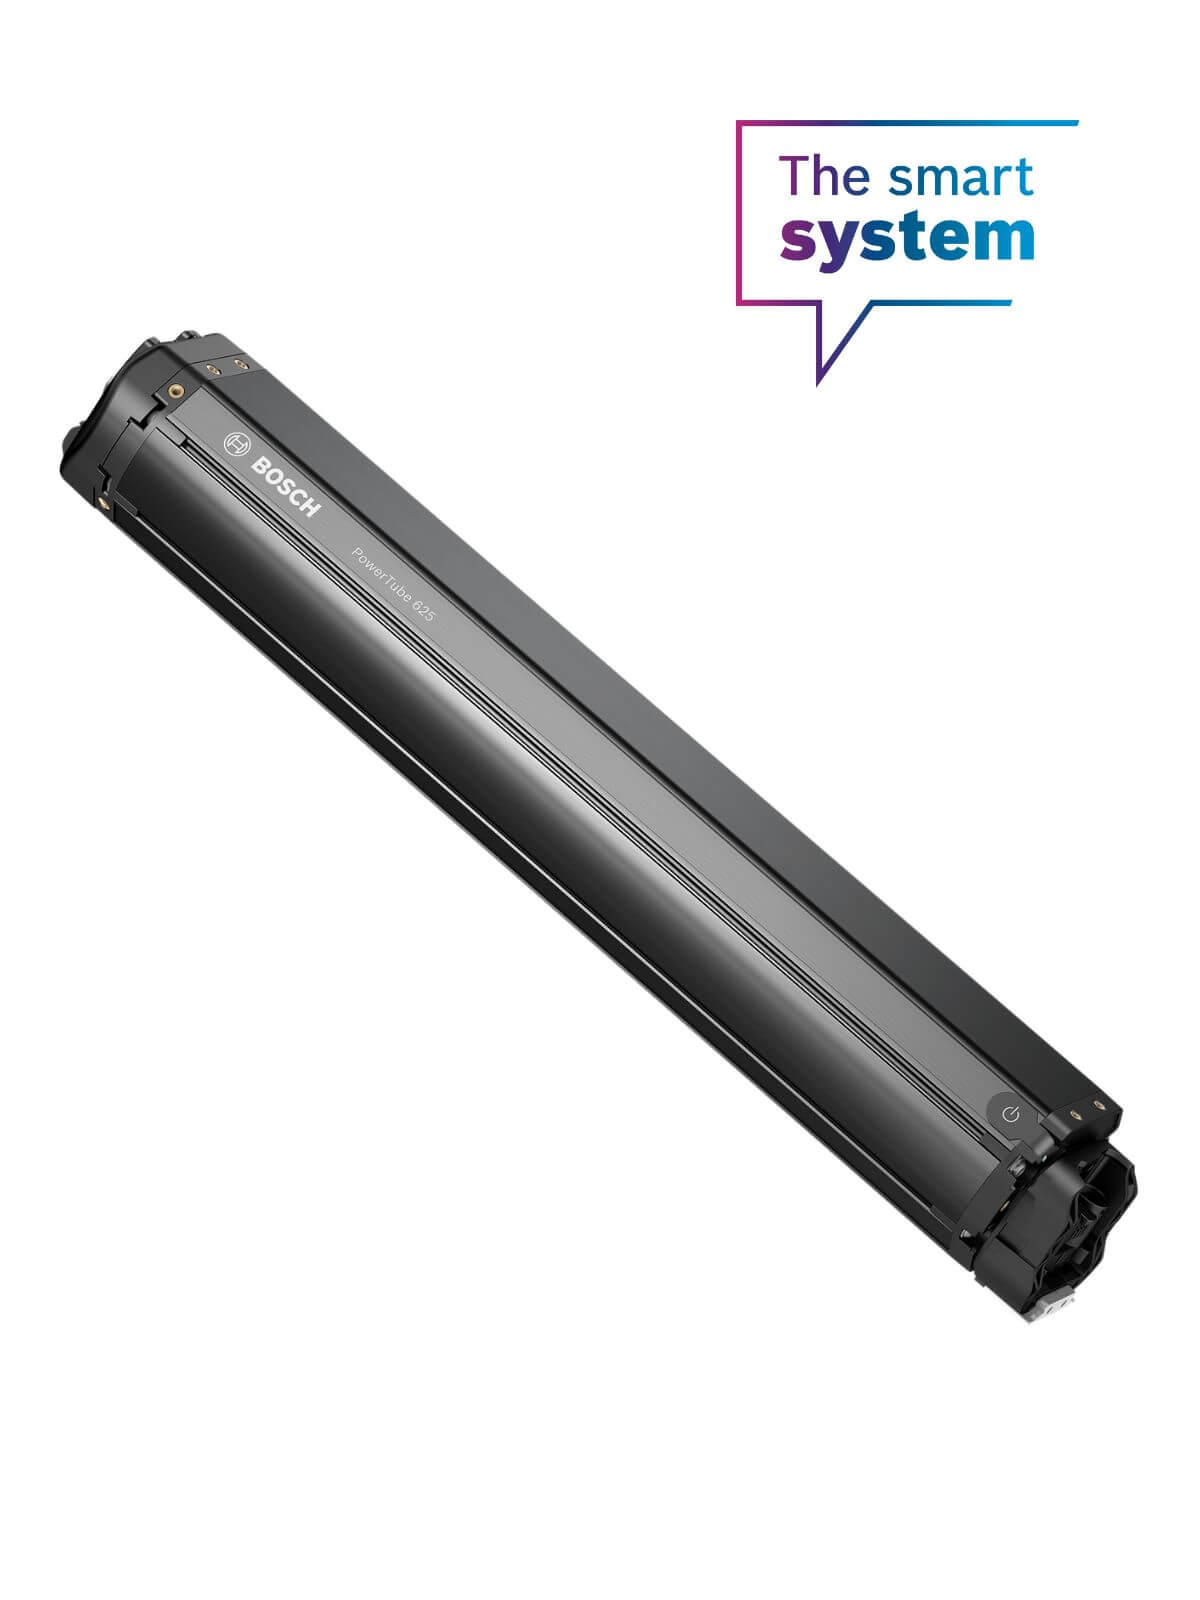 bosch smart system Power tube 625 battery